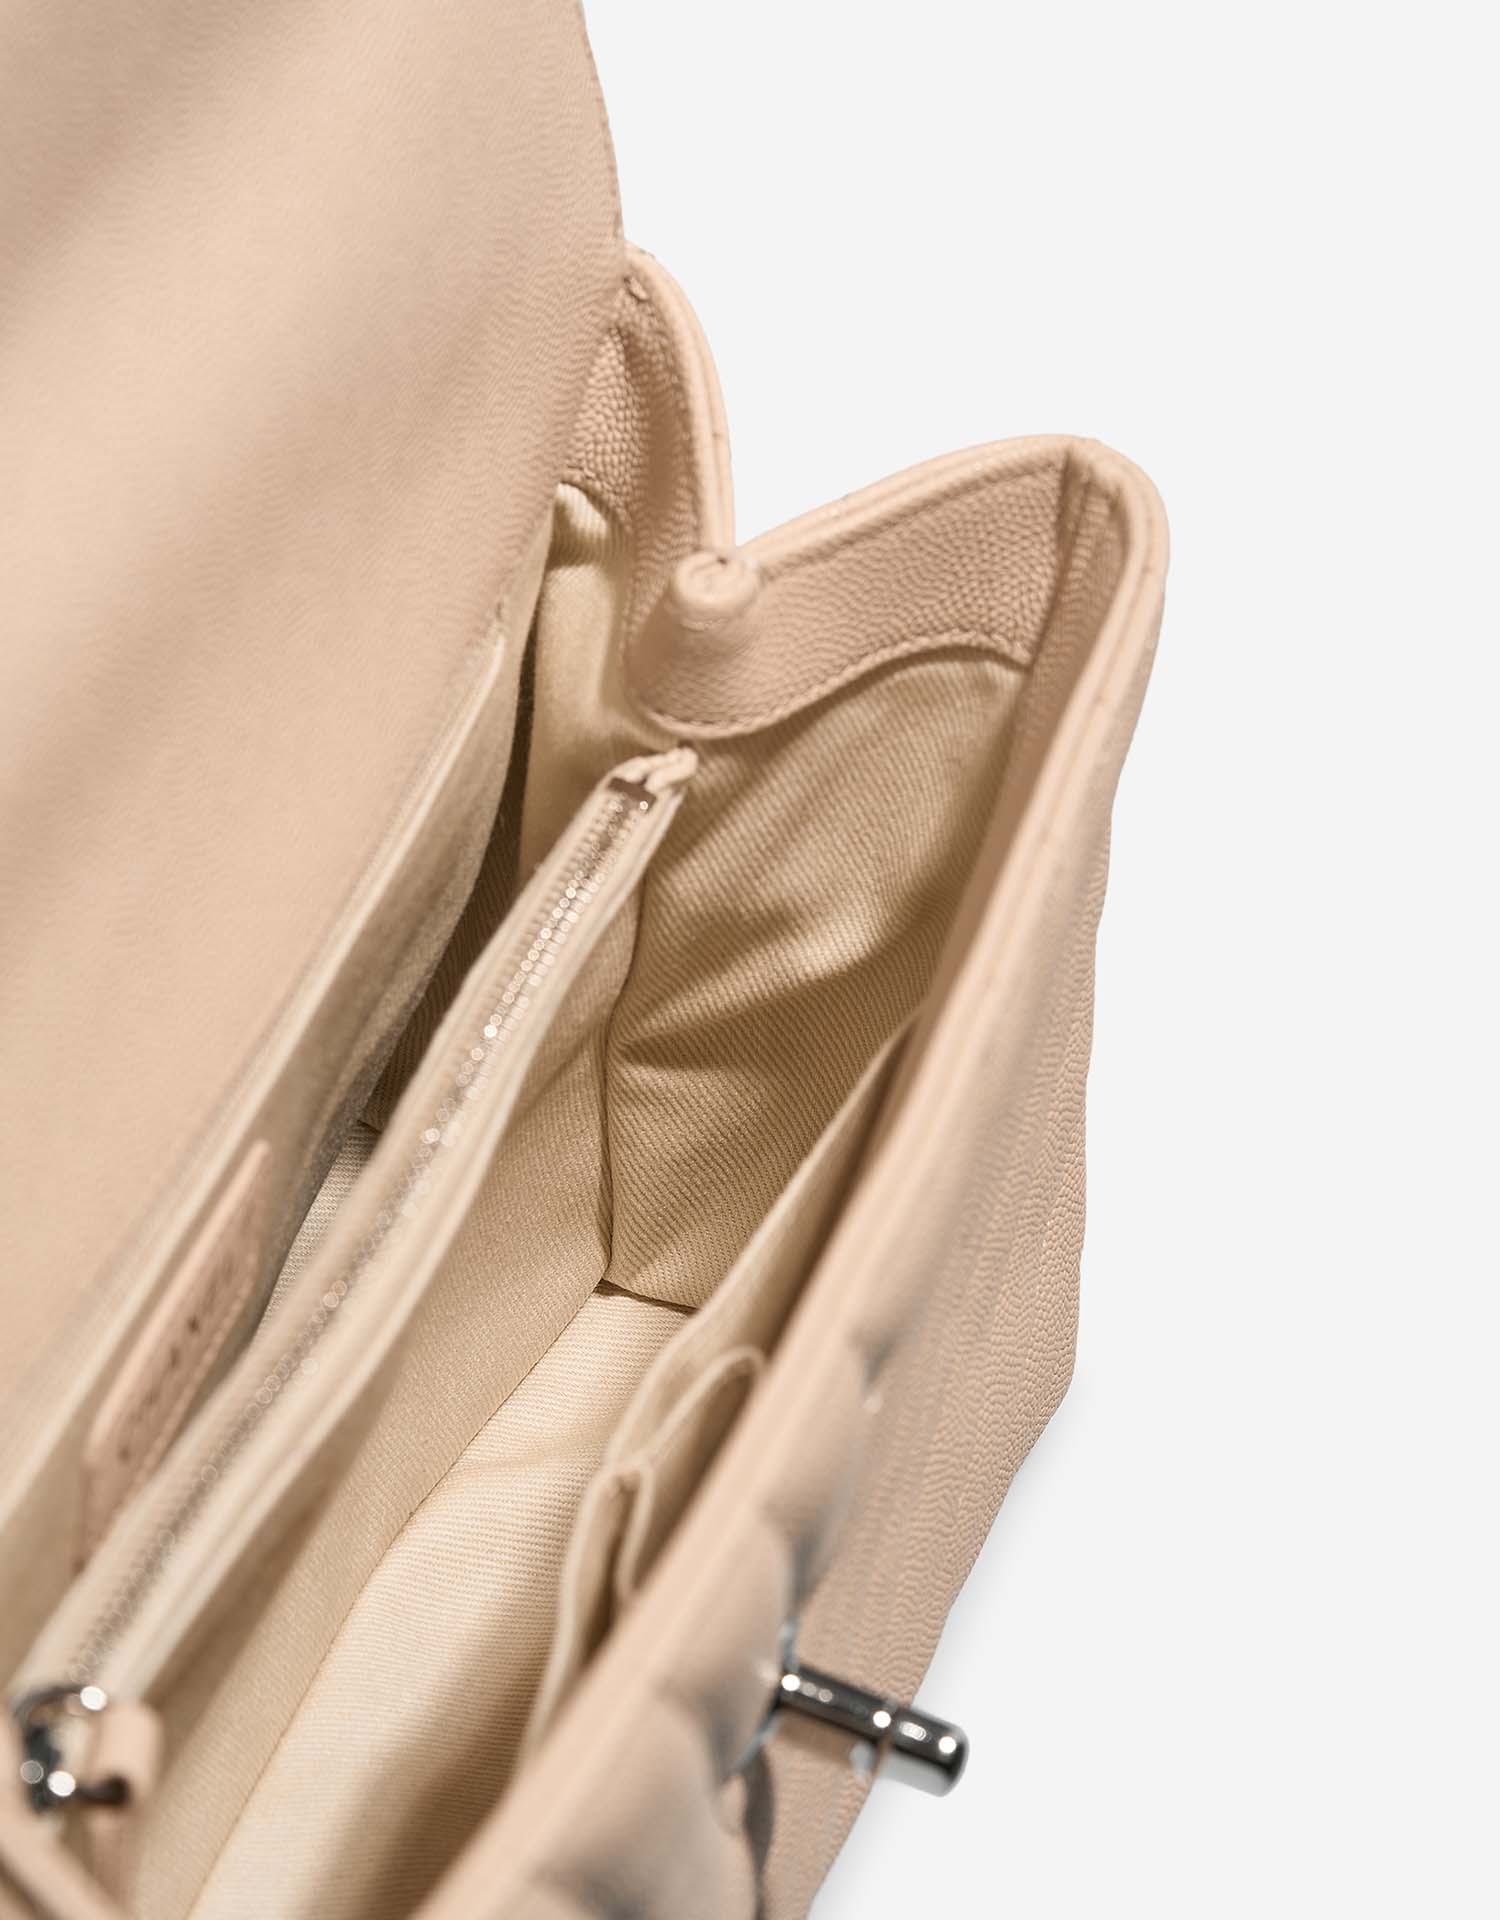 Chanel TimelessHandle Medium Beige Inside  | Sell your designer bag on Saclab.com